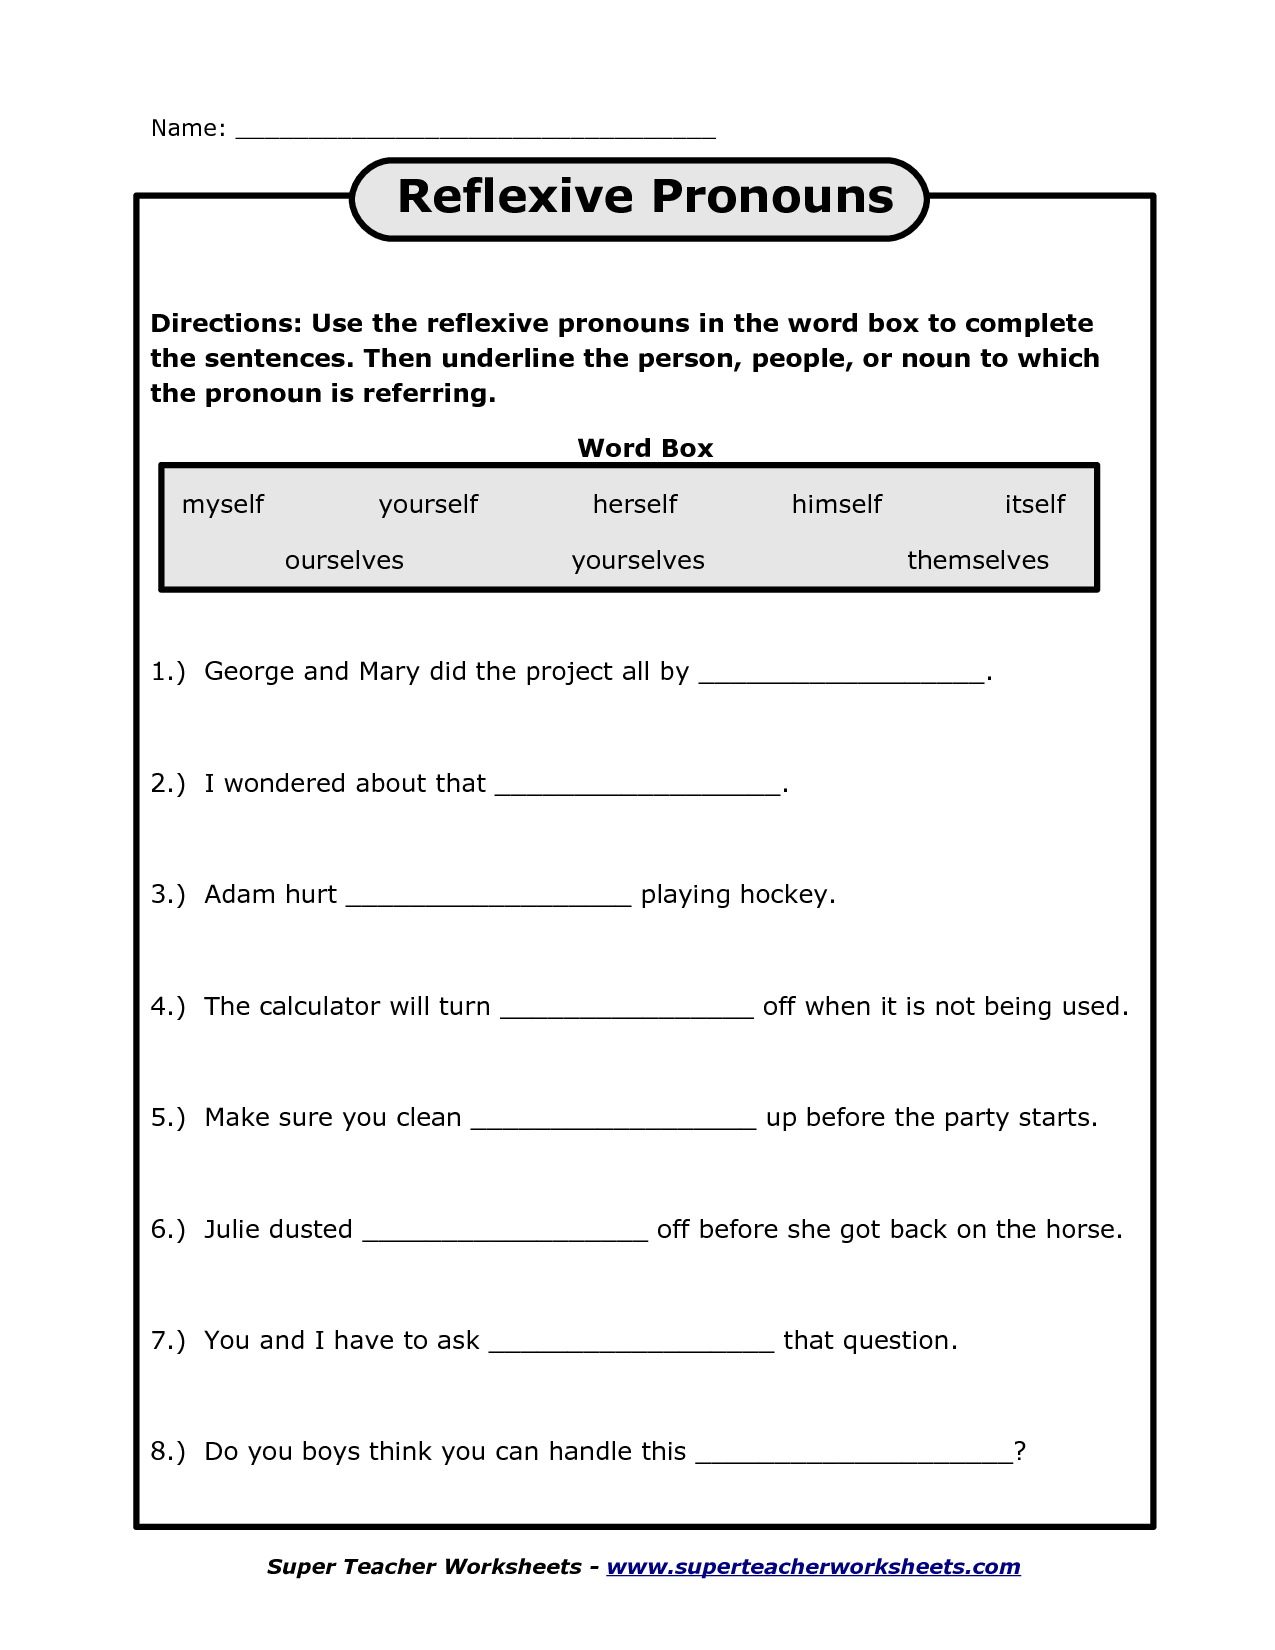 13 Best Images of Intensive Pronouns Worksheets - Reflexive Pronouns